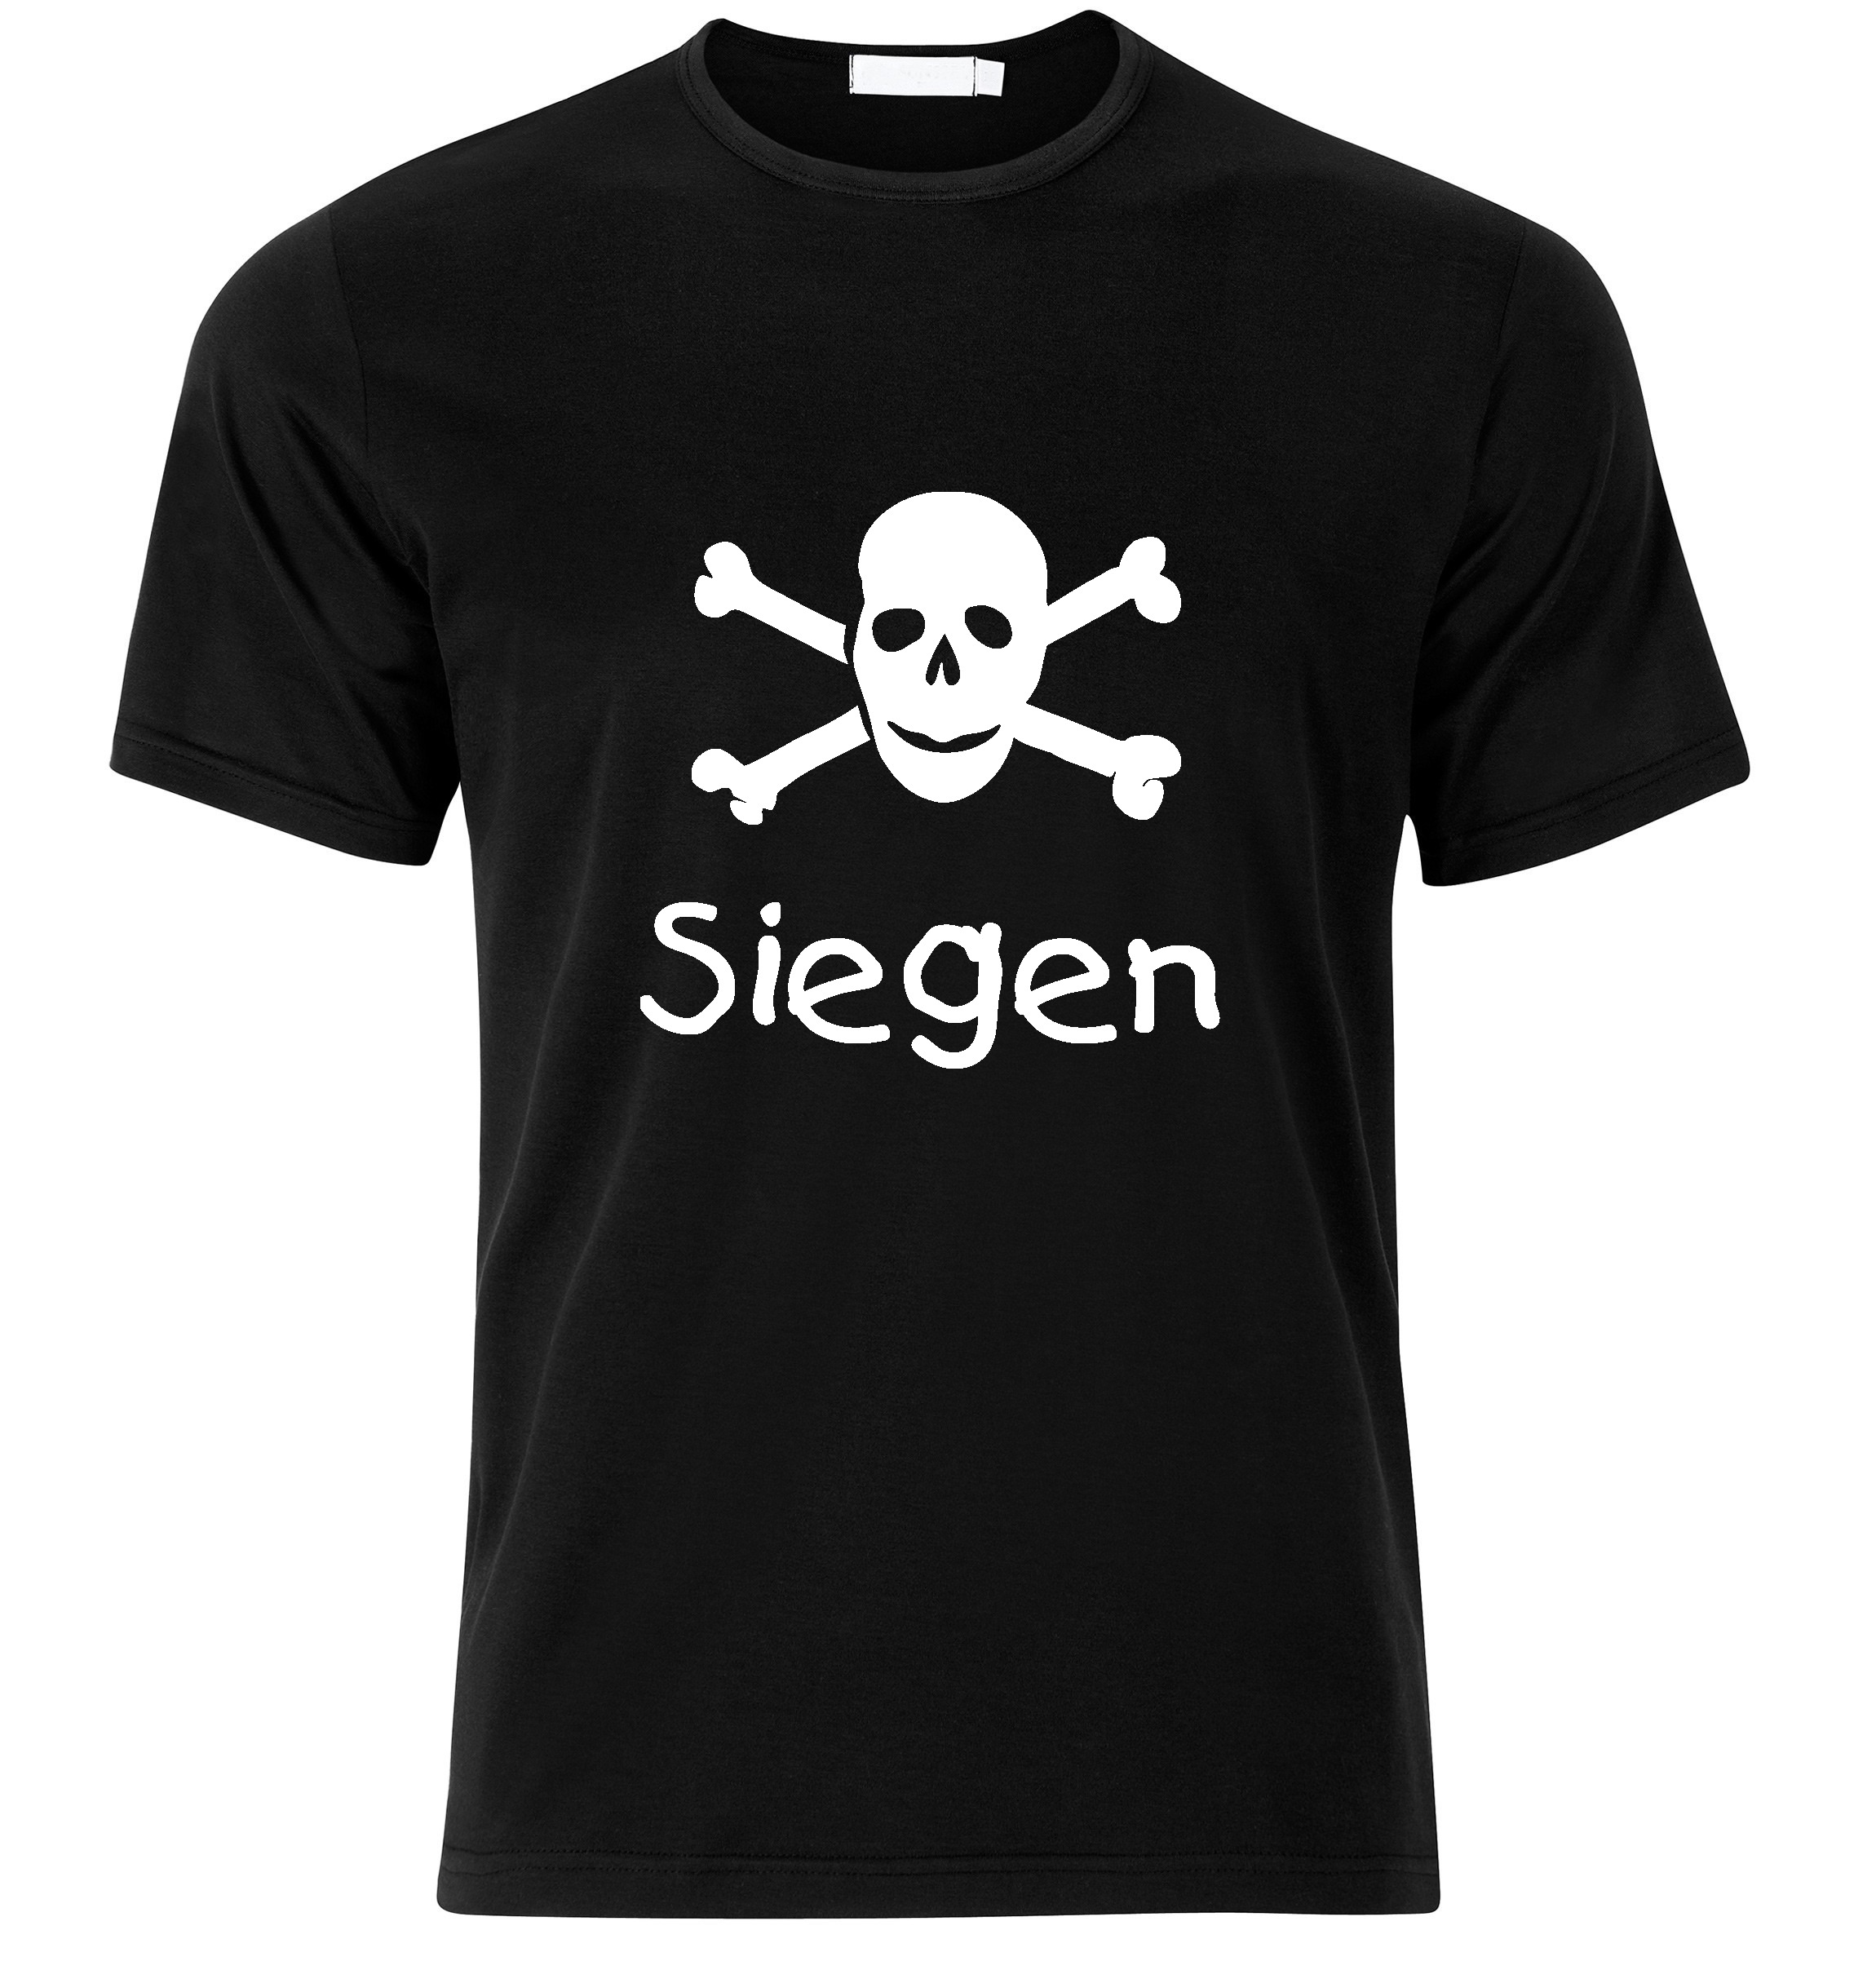 T-Shirt Siegen Jolly Roger, Totenkopf